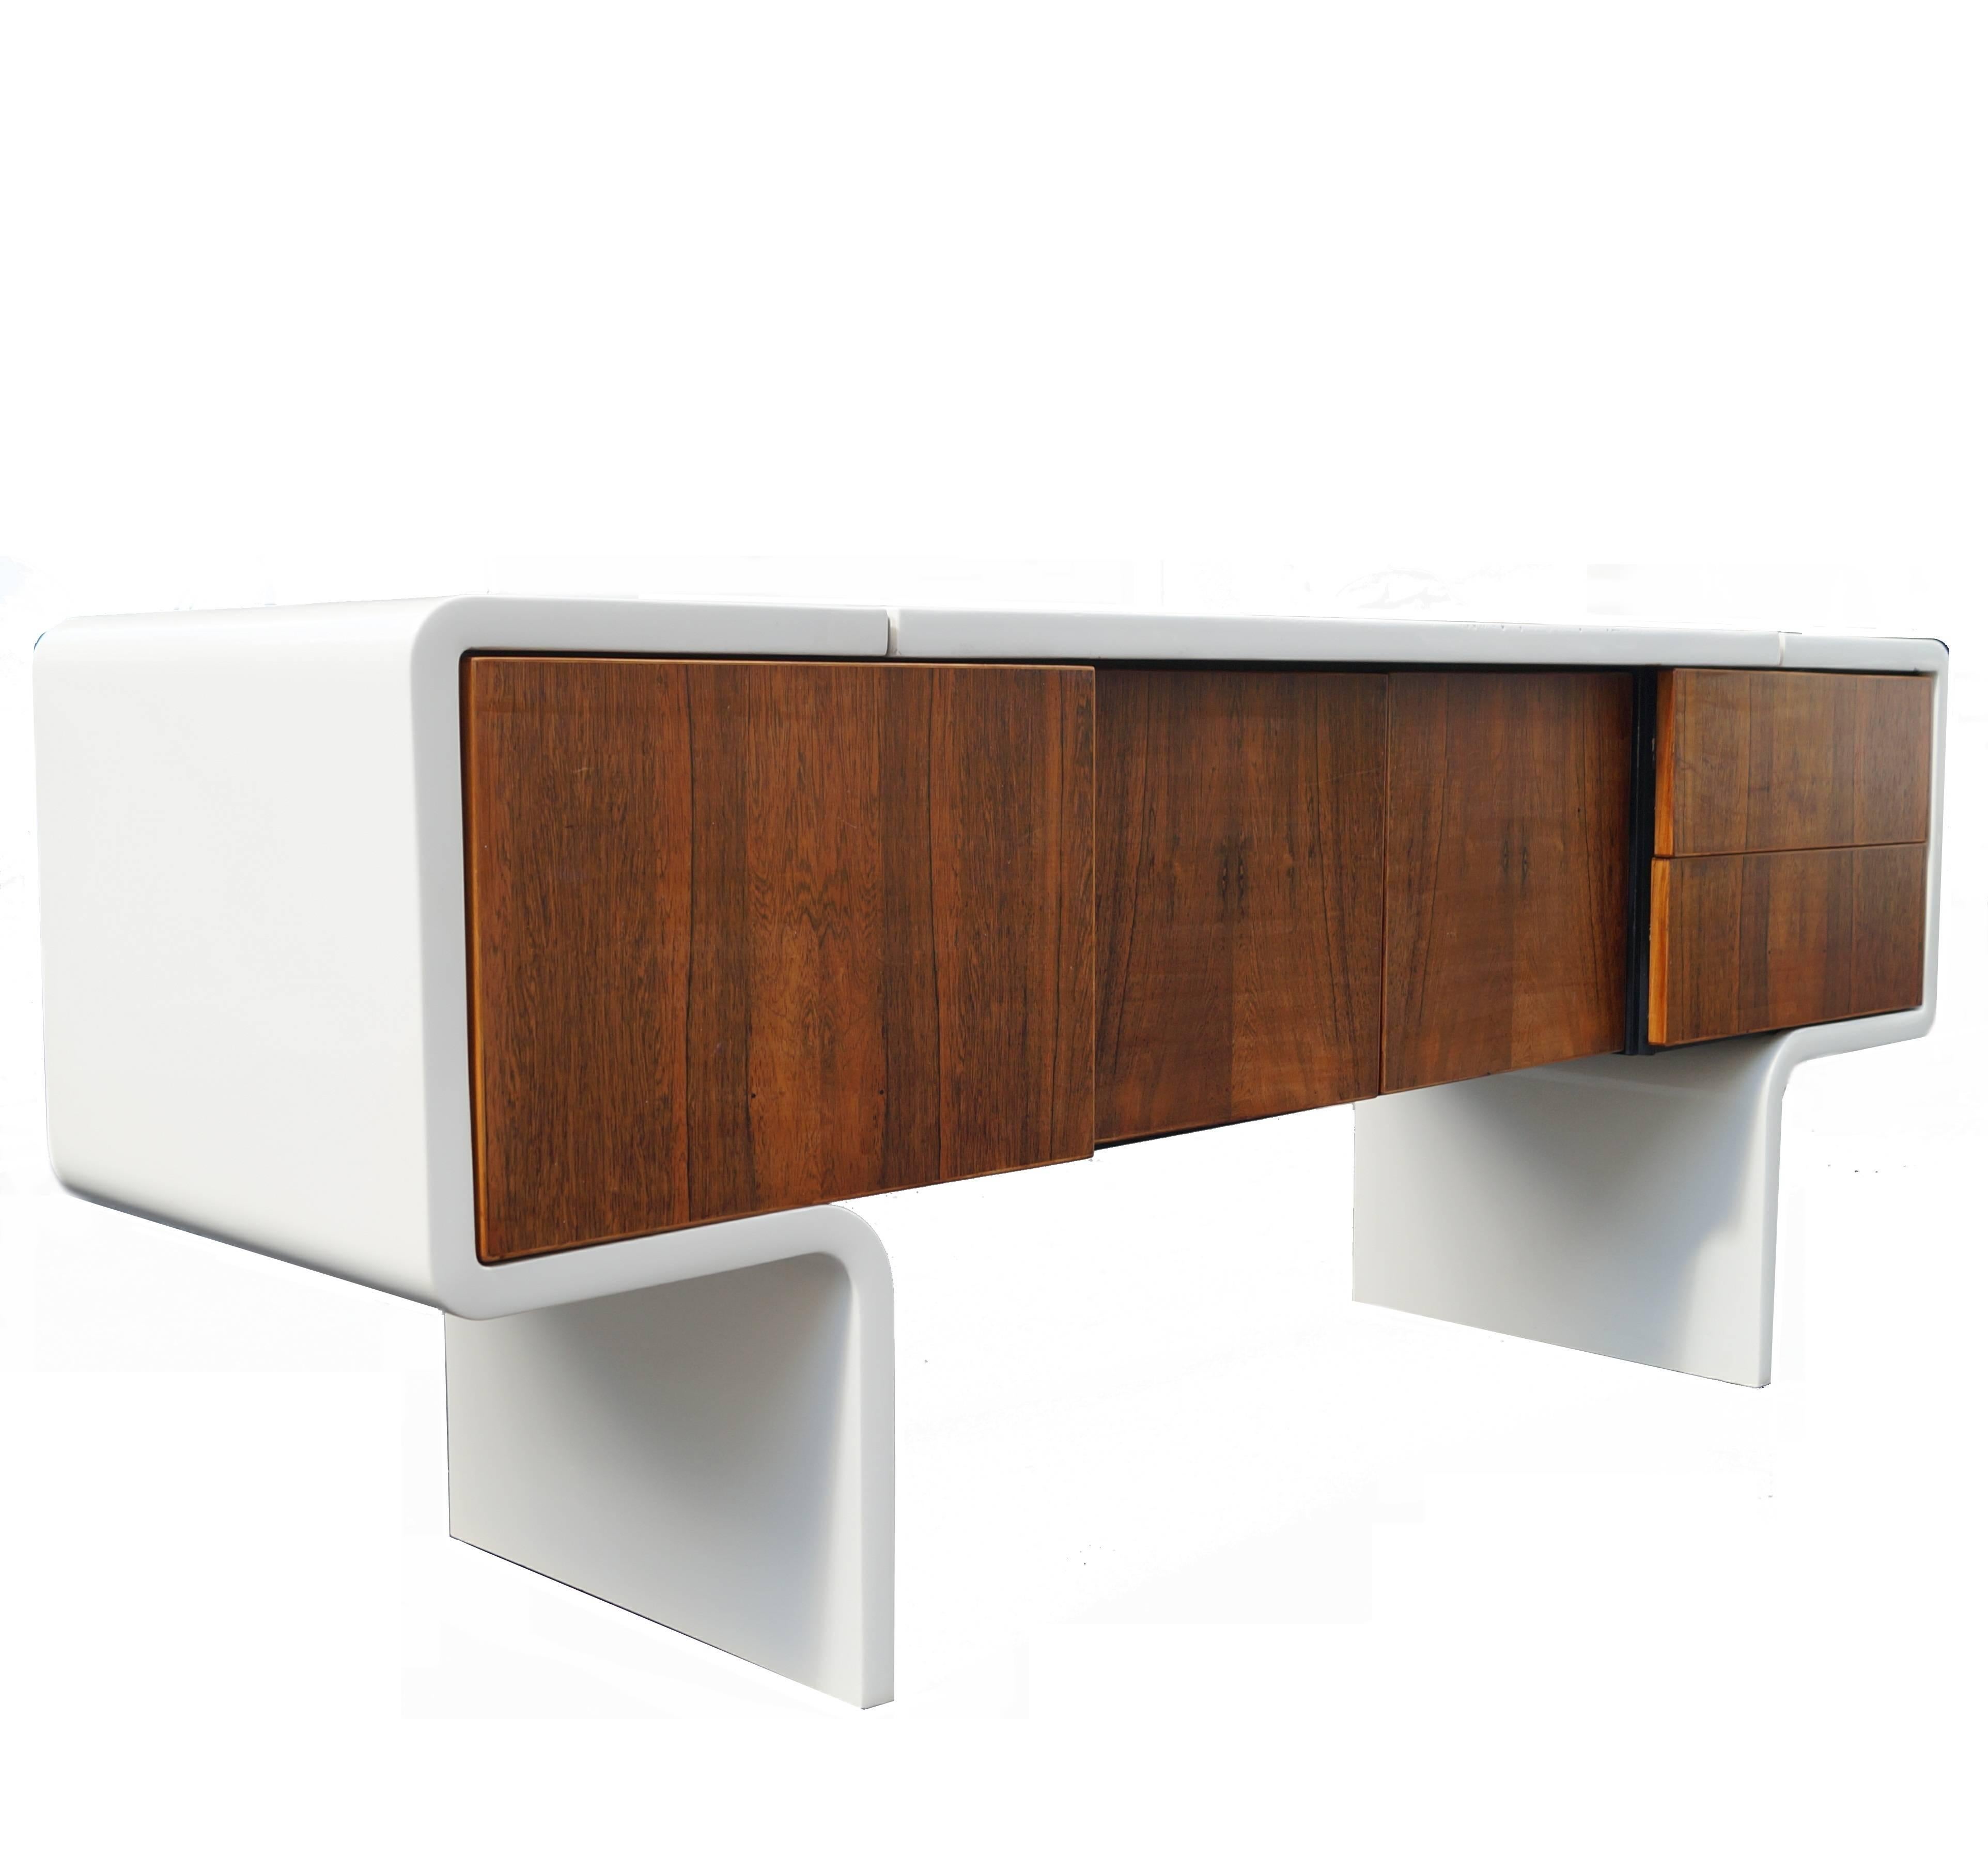 William Sklaroff “Uniplane” credenza rosewood drawer fronts and finished rosewood back.